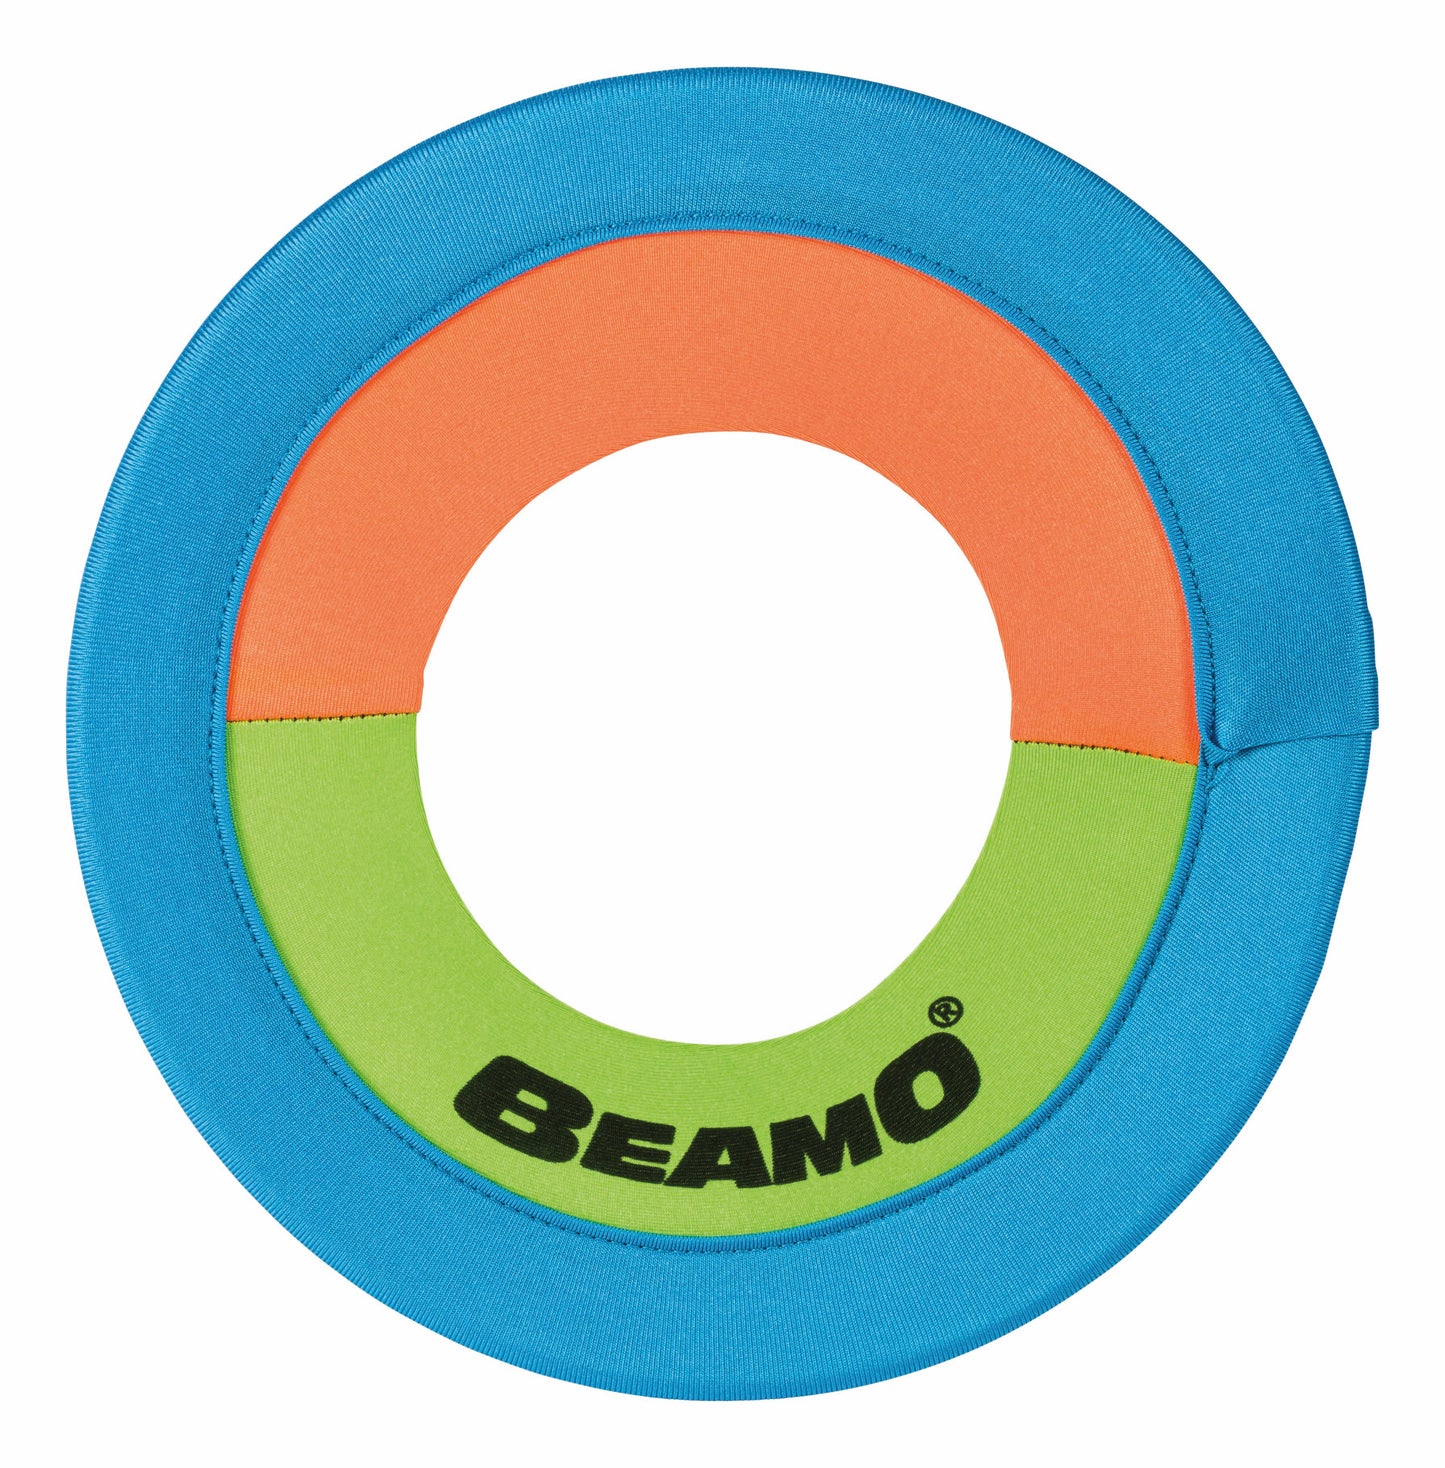 GO! Play Beamo 10" Flying Disc